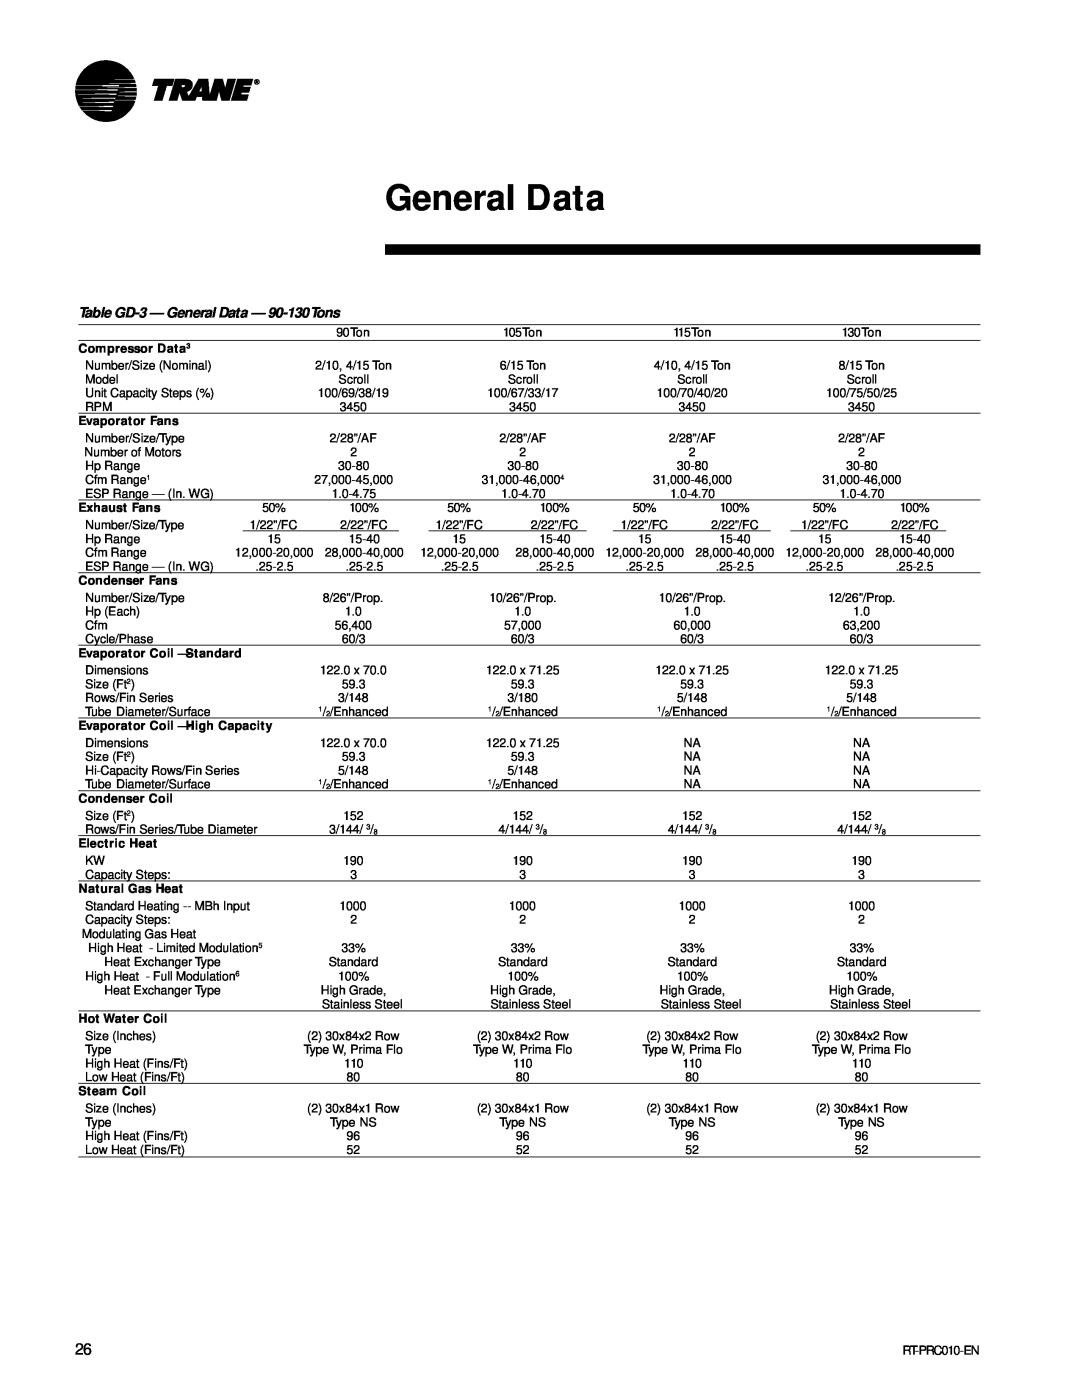 Trane RT-PRC010-EN manual Table GD-3— General Data — 90-130Tons 